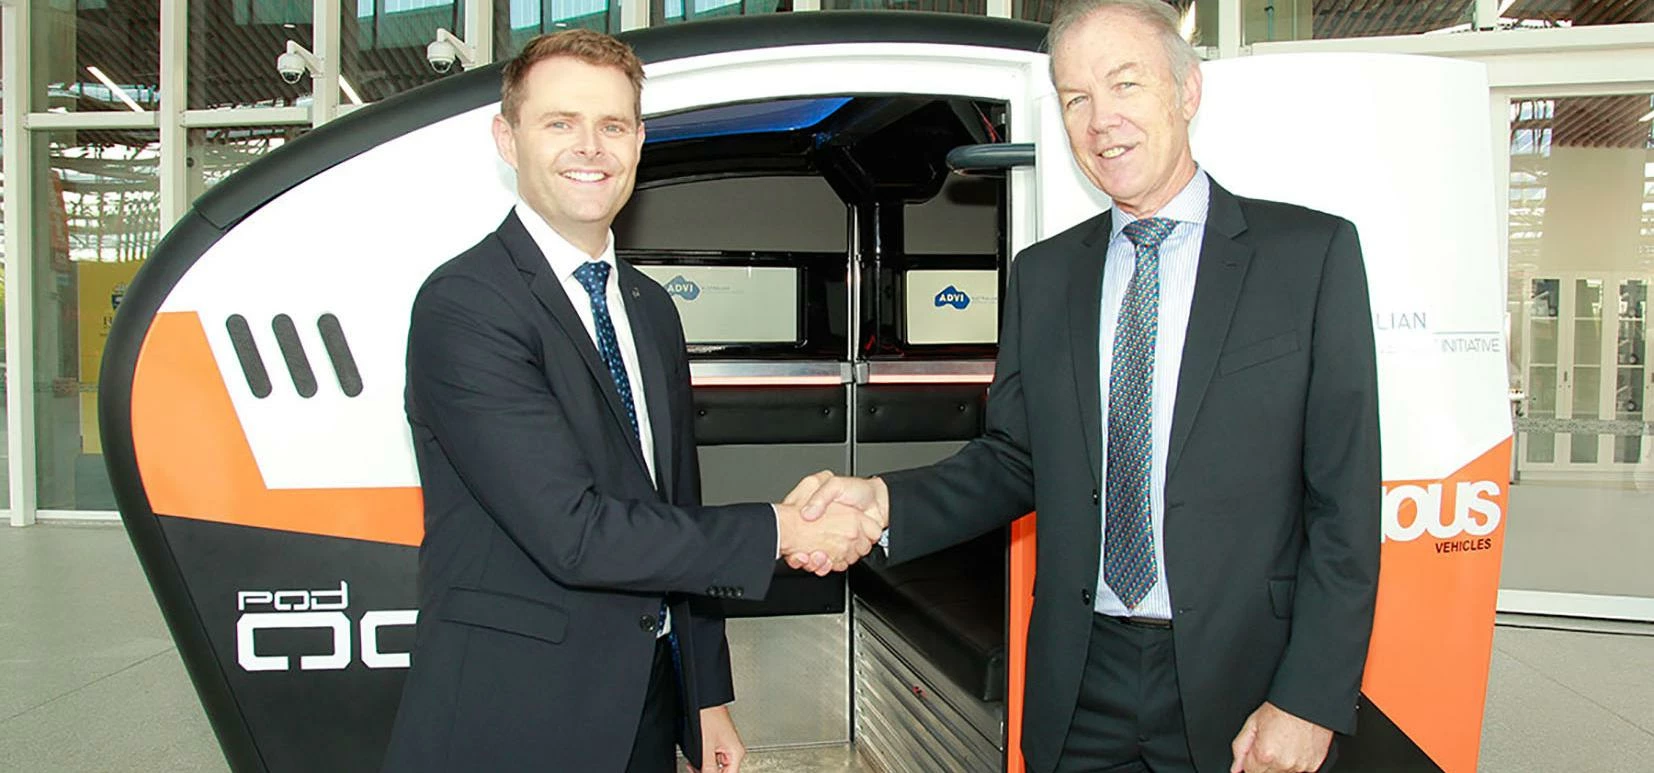 (l-r) Hon. Stephen Mulligan MP (Minister for Transport and Infrastructure) and Roger van der Lee (RD